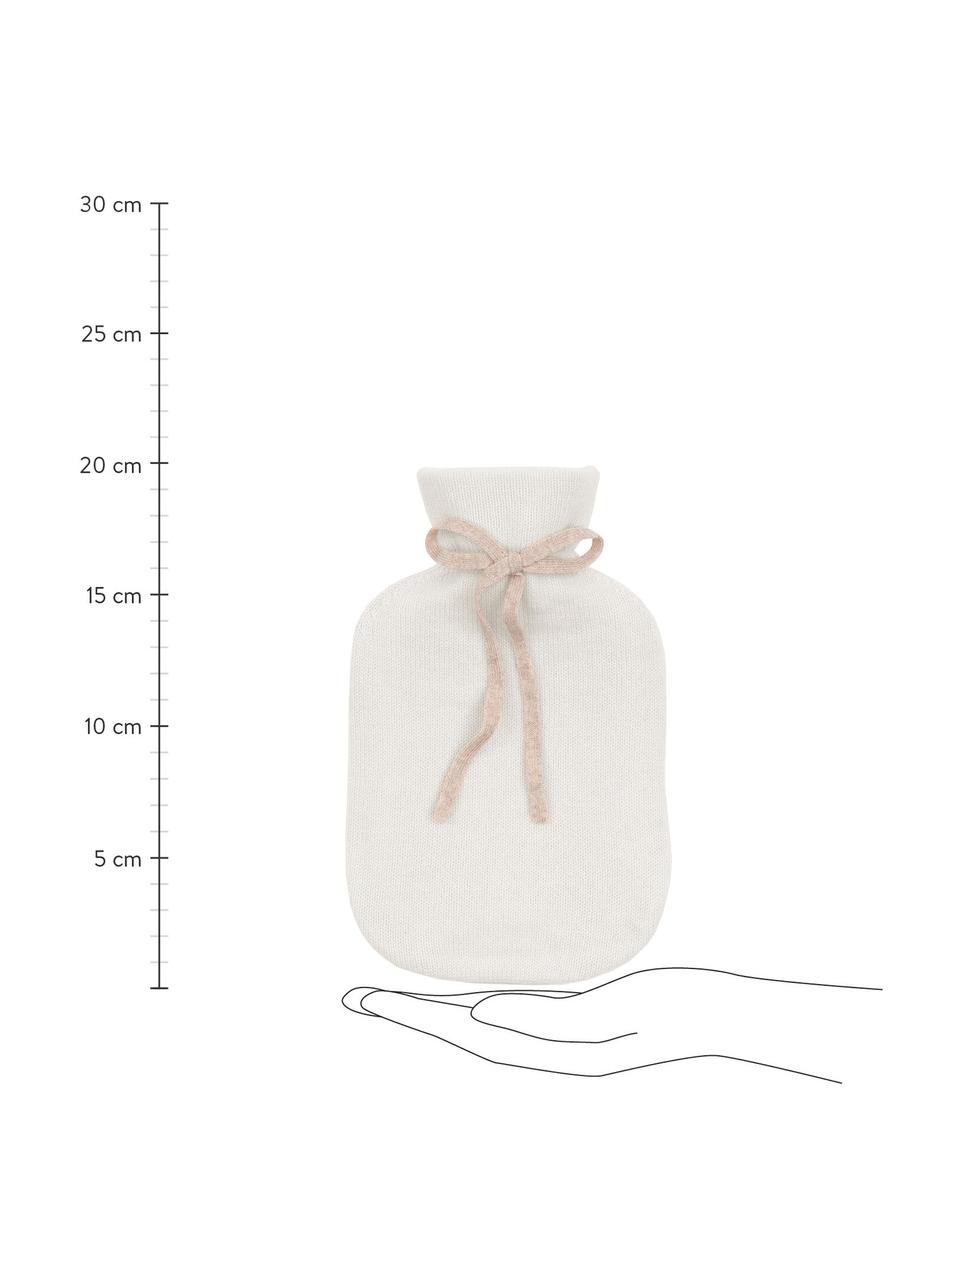 Bolsa de agua caliente de cachemira Florentina, Funda: 70% cachemira, 30% lana, Blanco crema, An 19 x L 30 cm